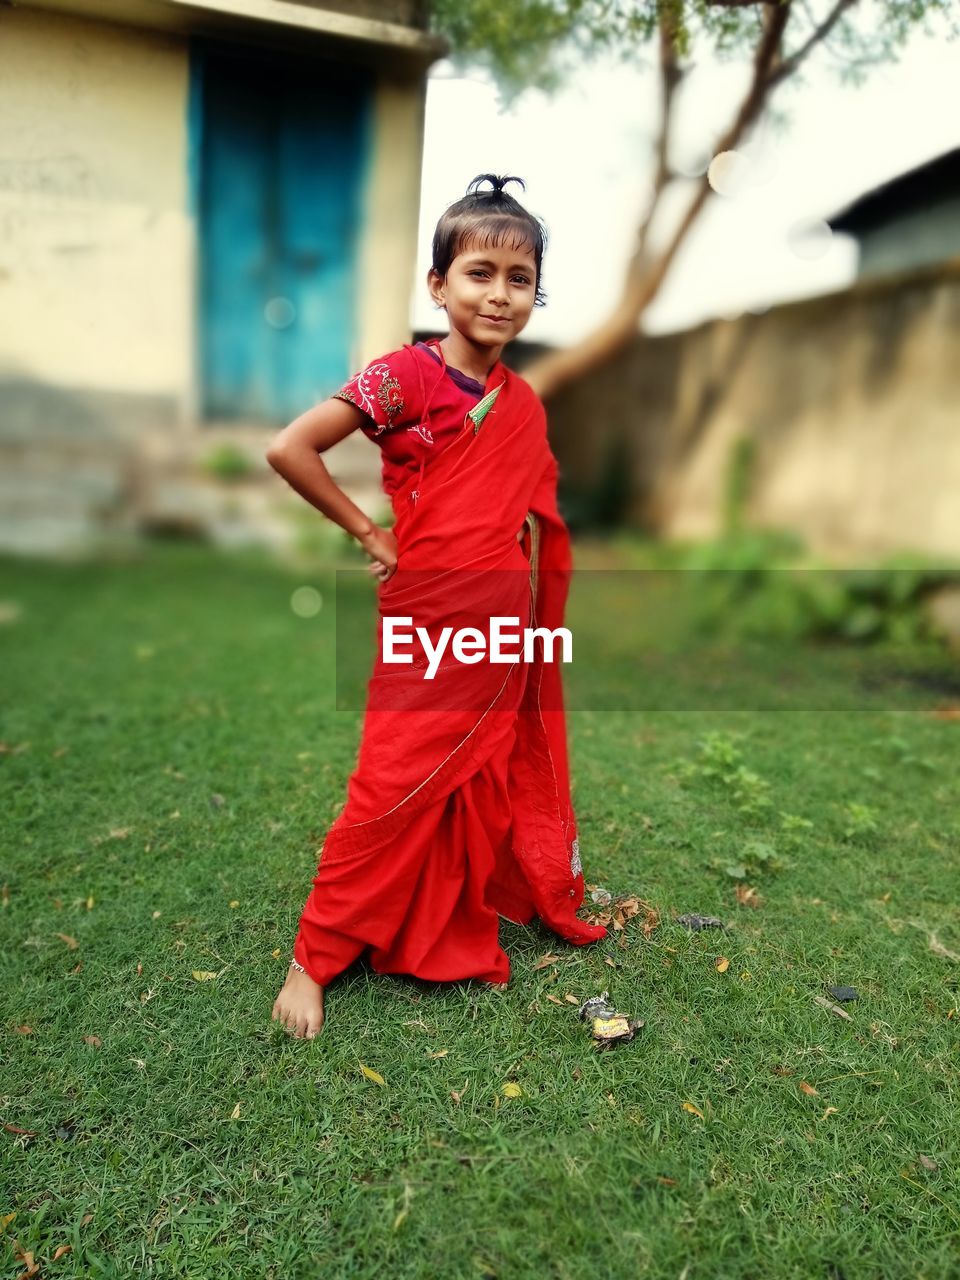 Portrait of smiling girl wearing sari standing in yard